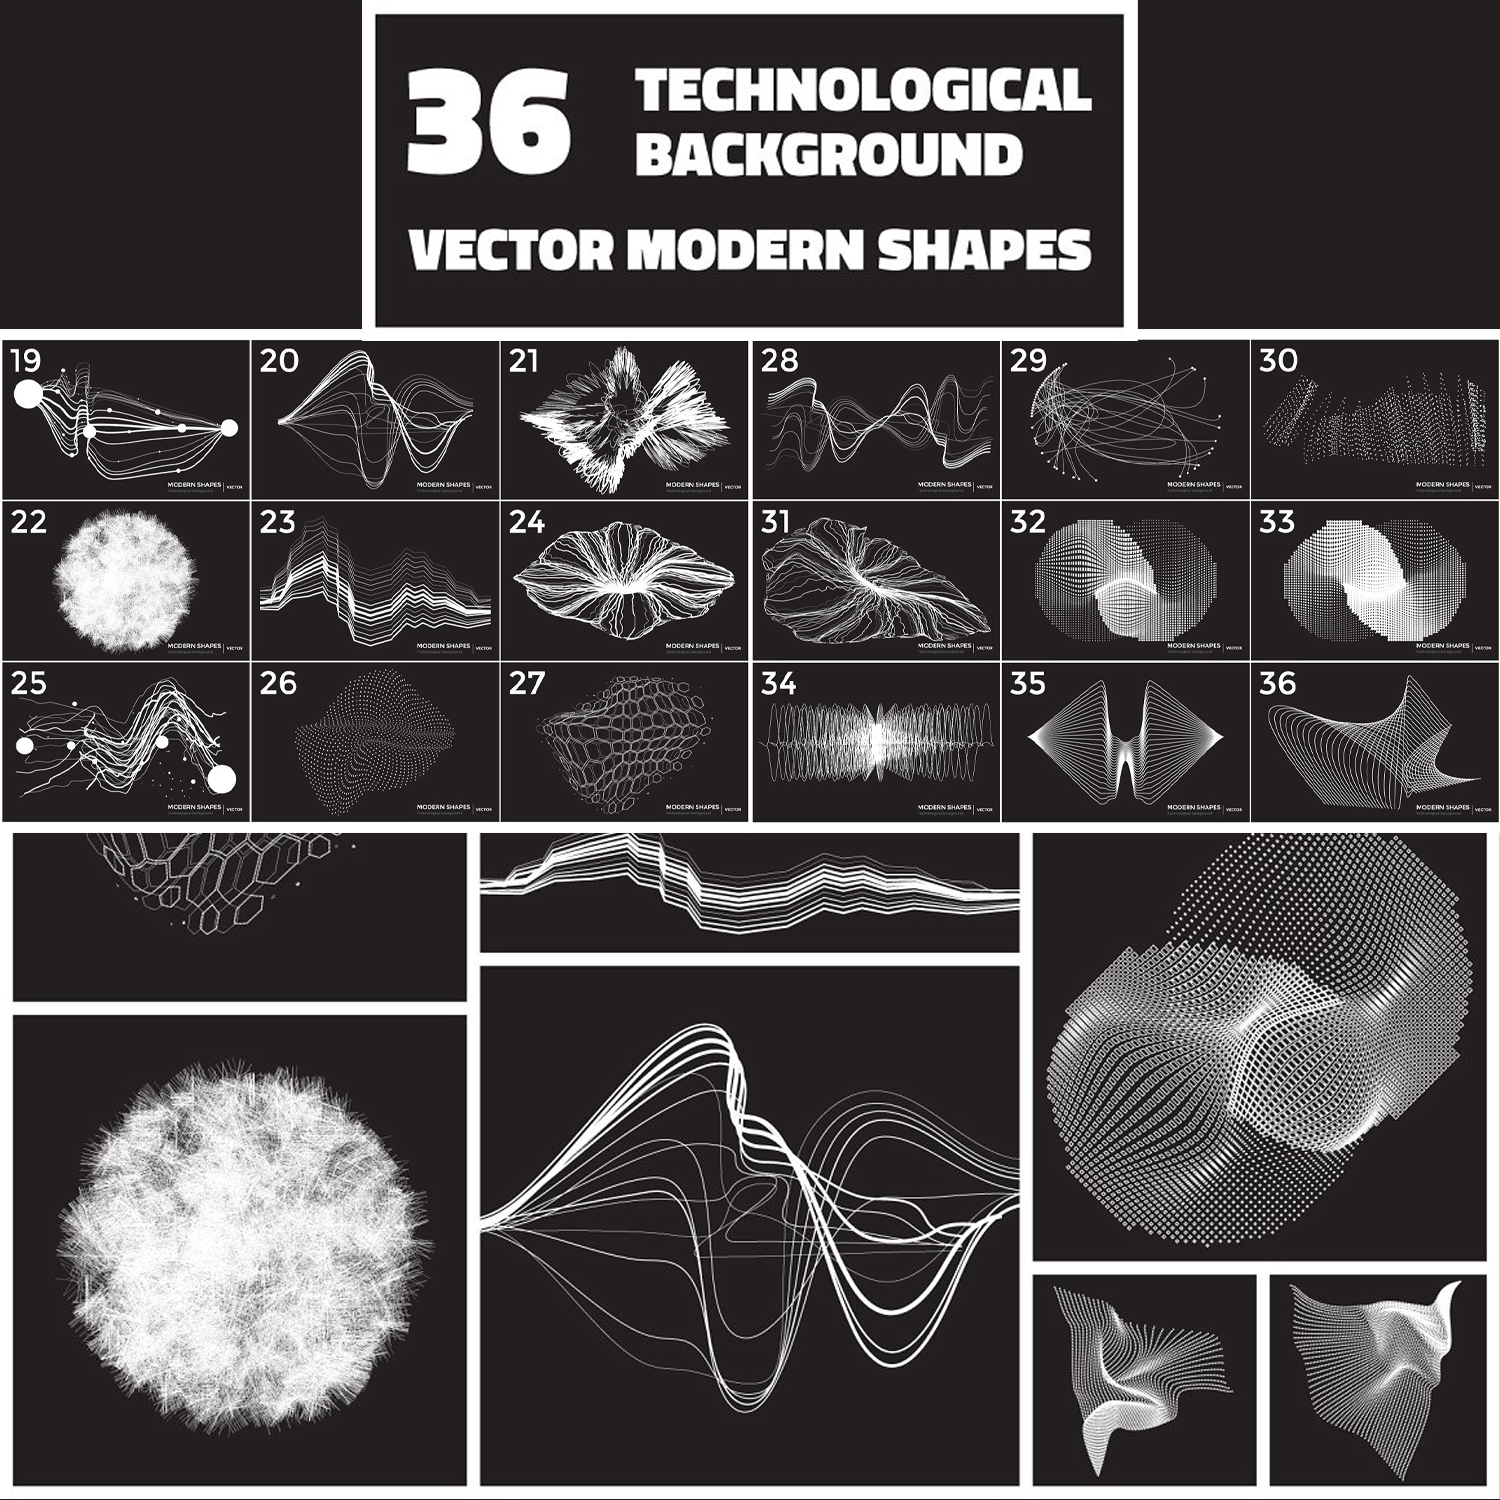 36 technological shapes images.